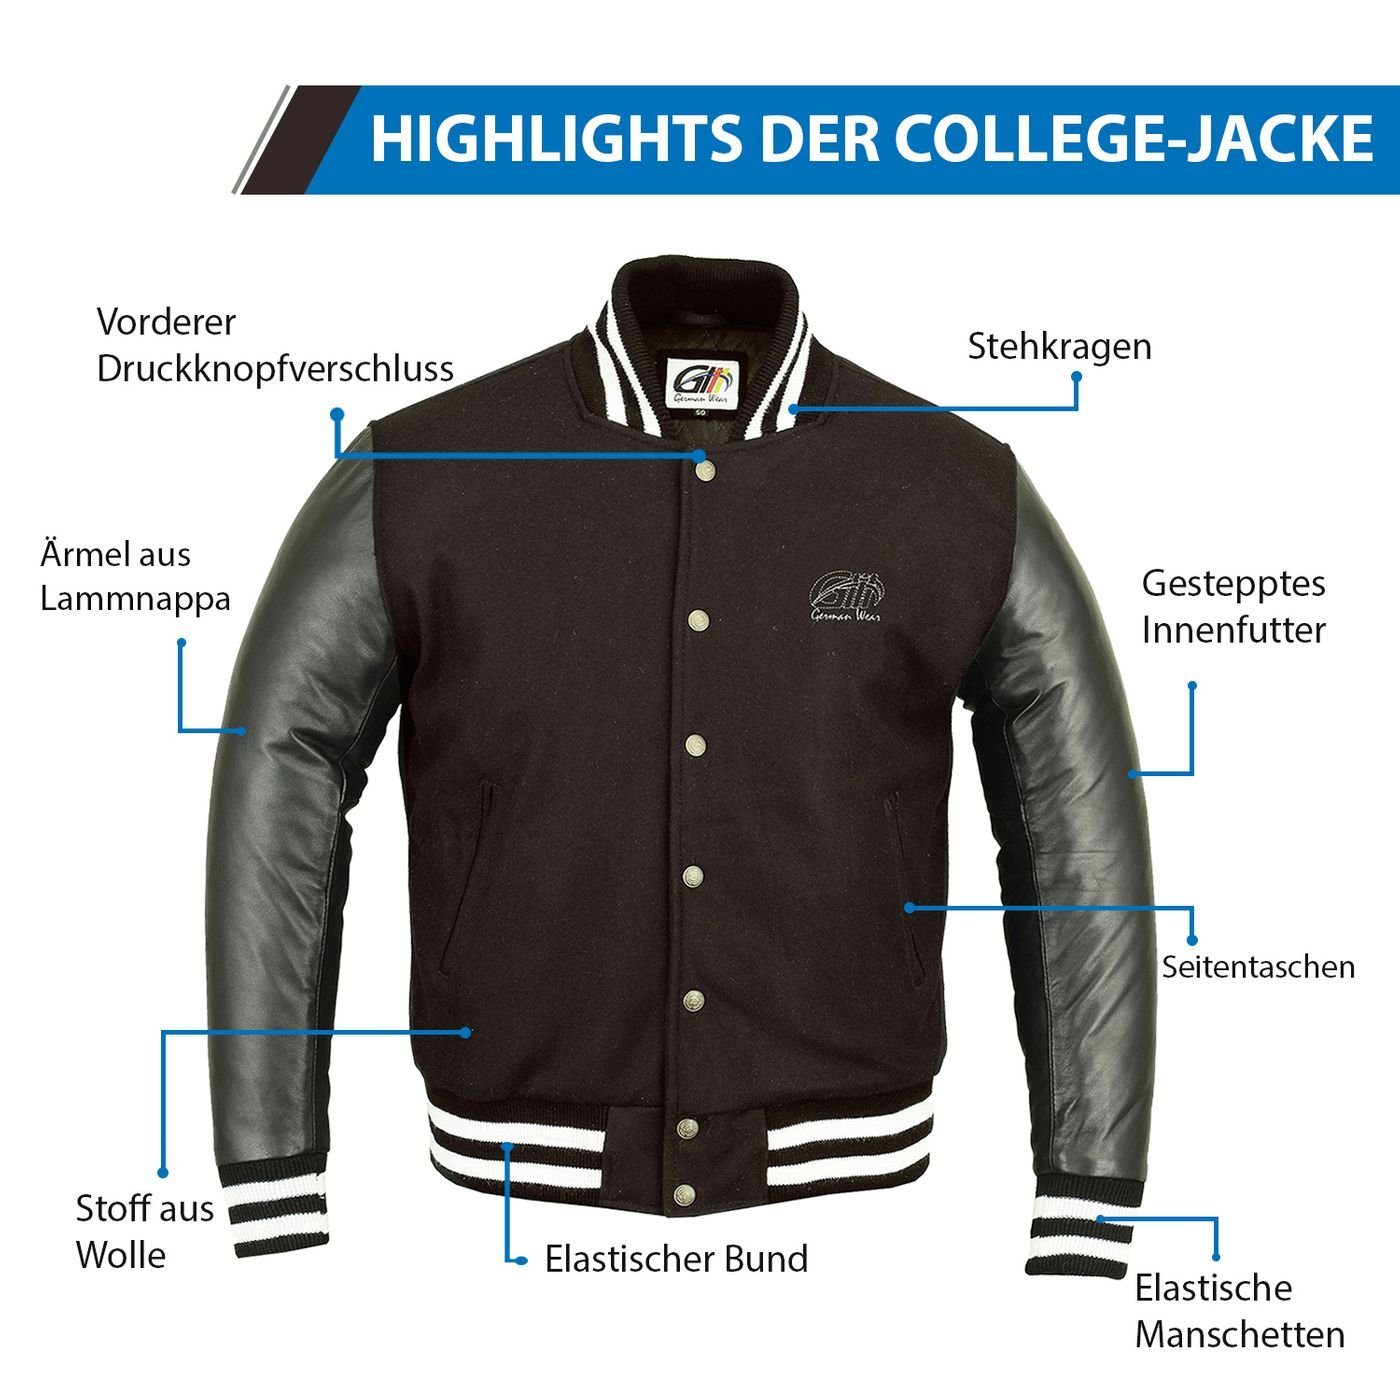 German Wear Collegejacke Dunkelbraun Collegejacke CJ002 Lederärmel Wolljacke Blouson mit